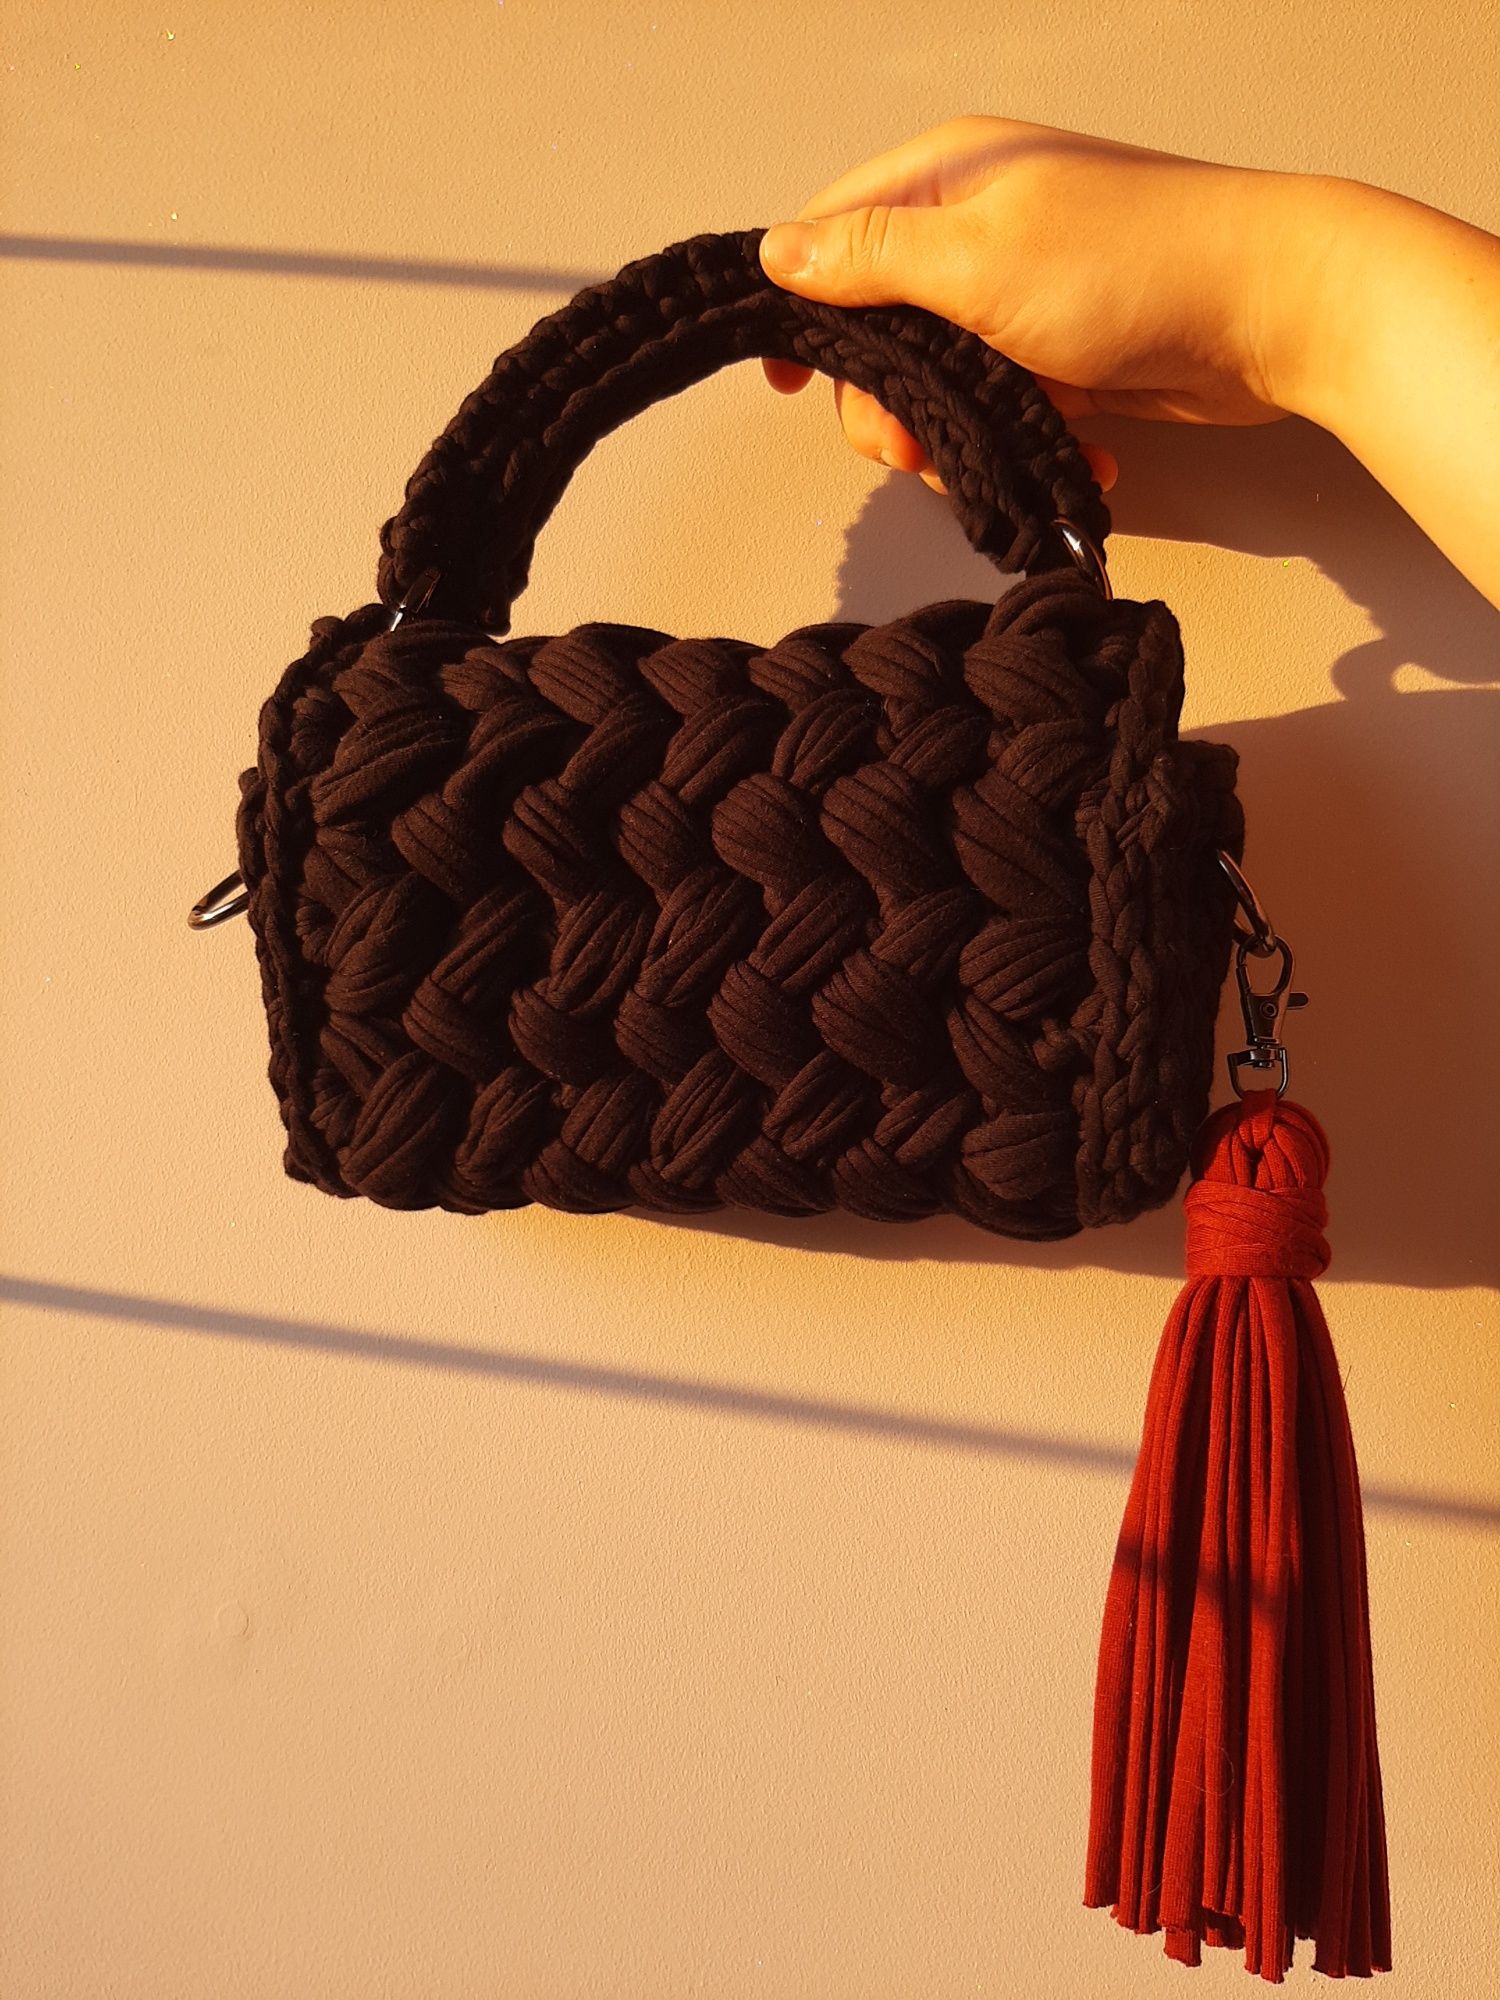 Torebka Puff Bag wykonana na szydełku, handmade